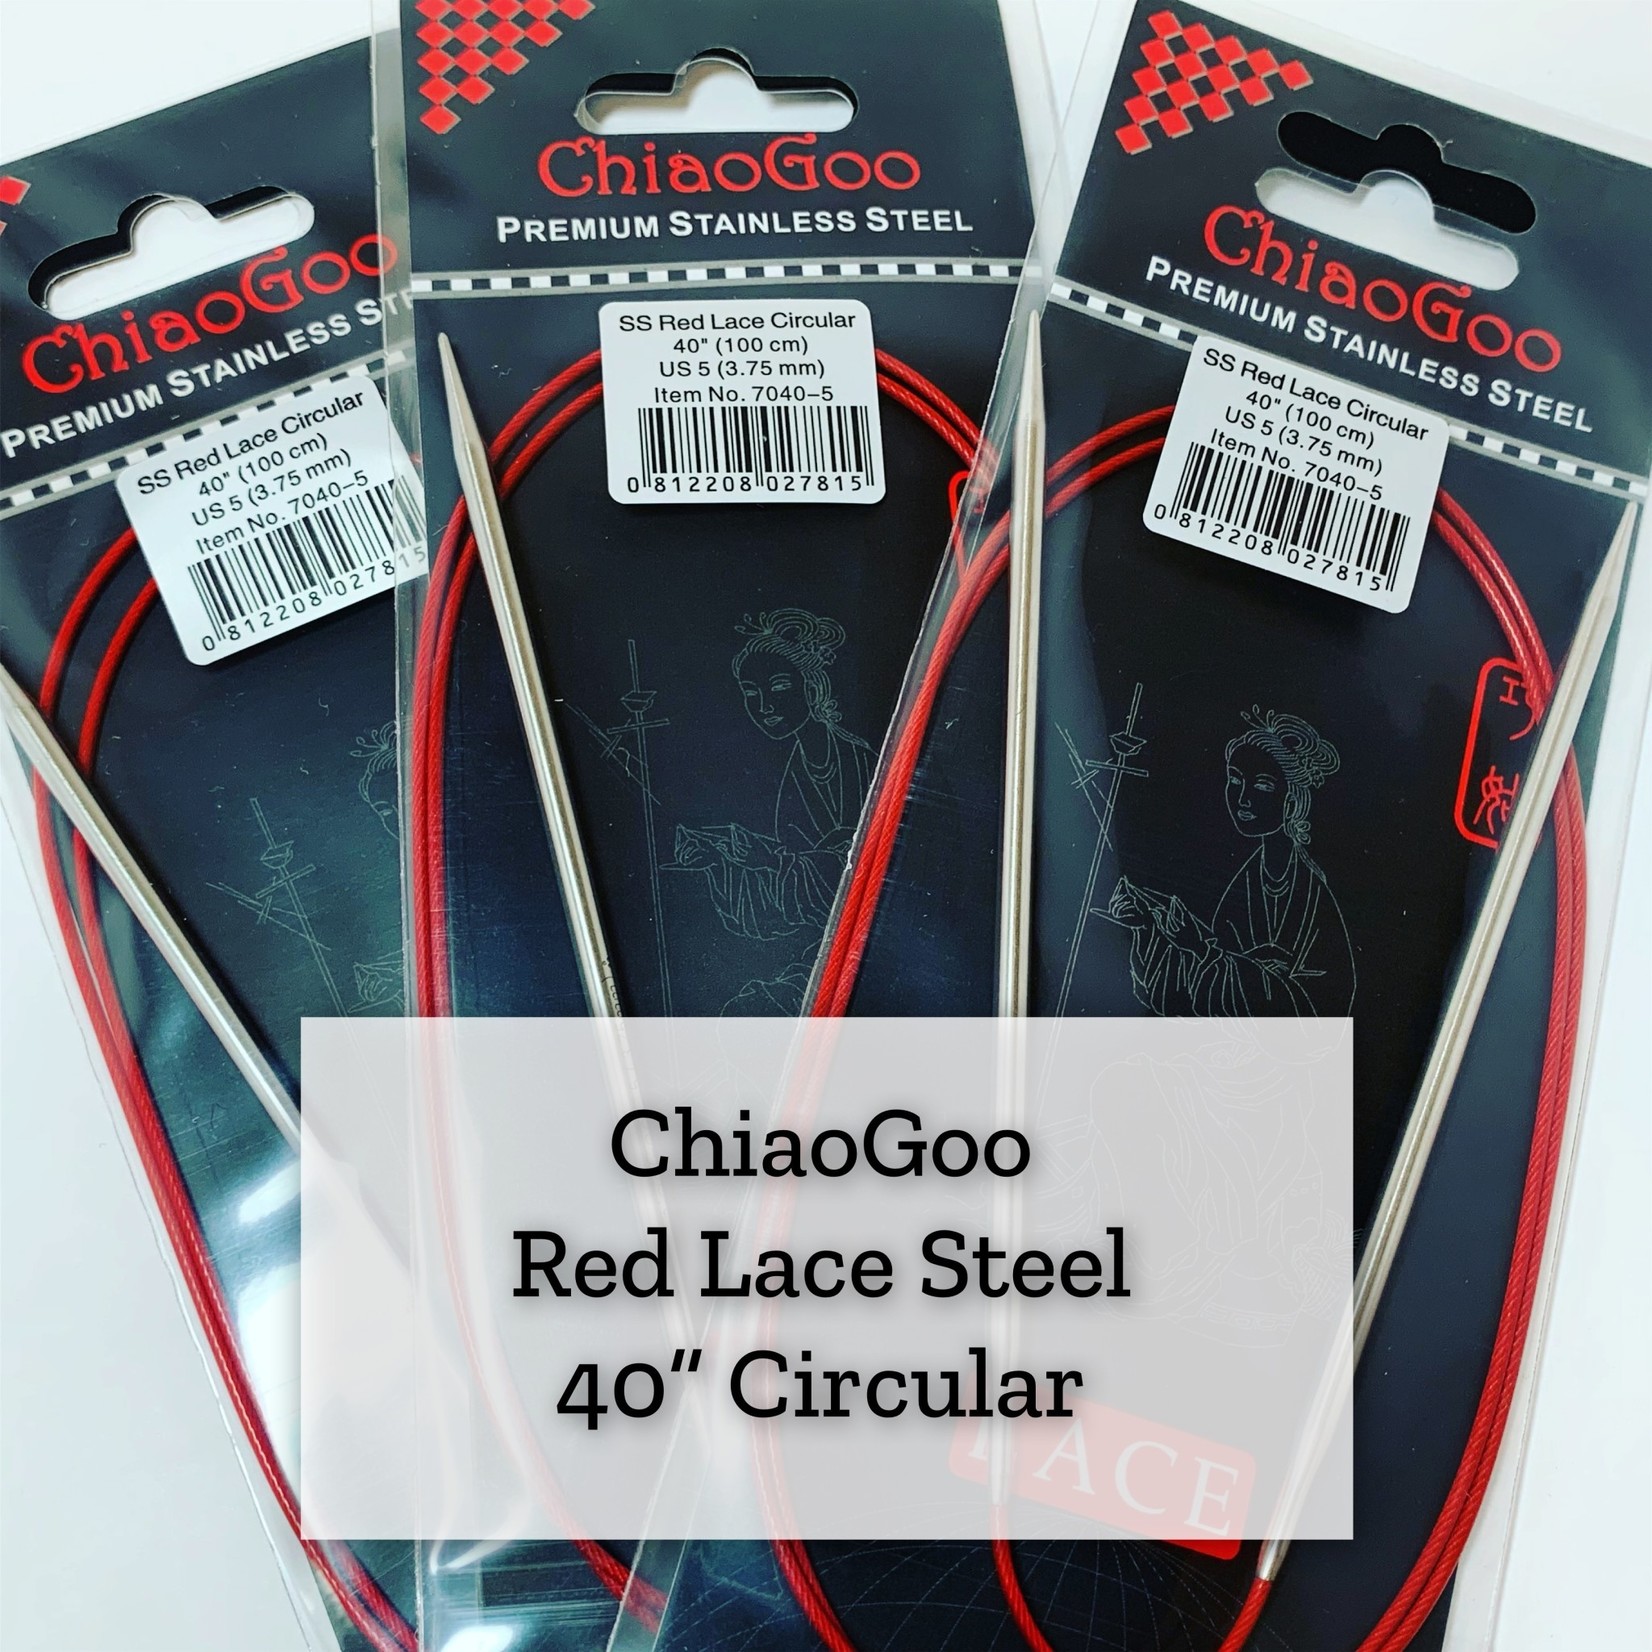 ChiaoGoo Red Lace Steel - 40" 4.5 mm